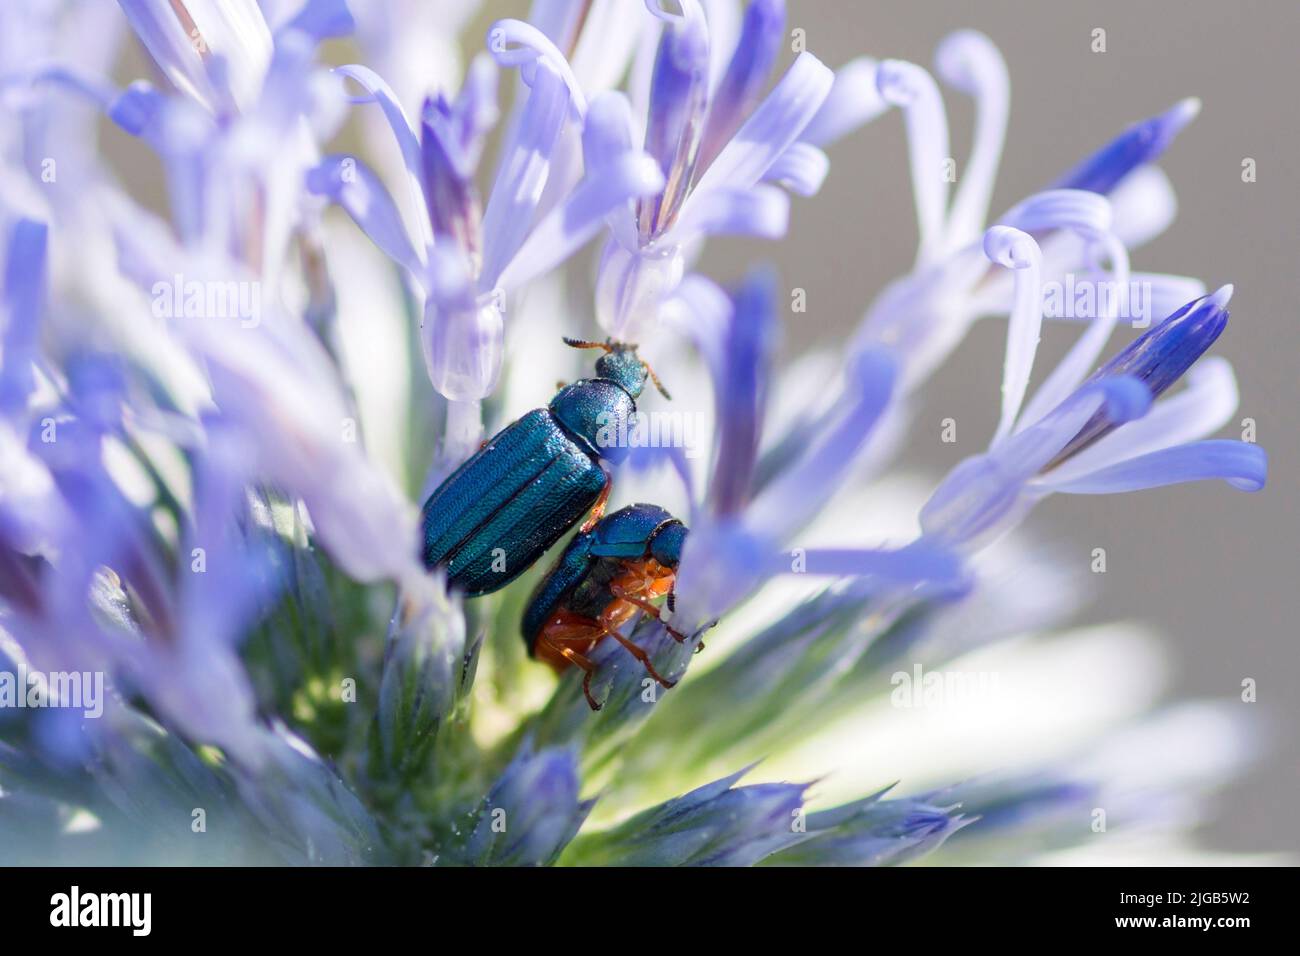 Melyris bicolor beetle on a globe histle flower (Echninops), Melyris bicolor Fabricius, 1801 Stock Photo